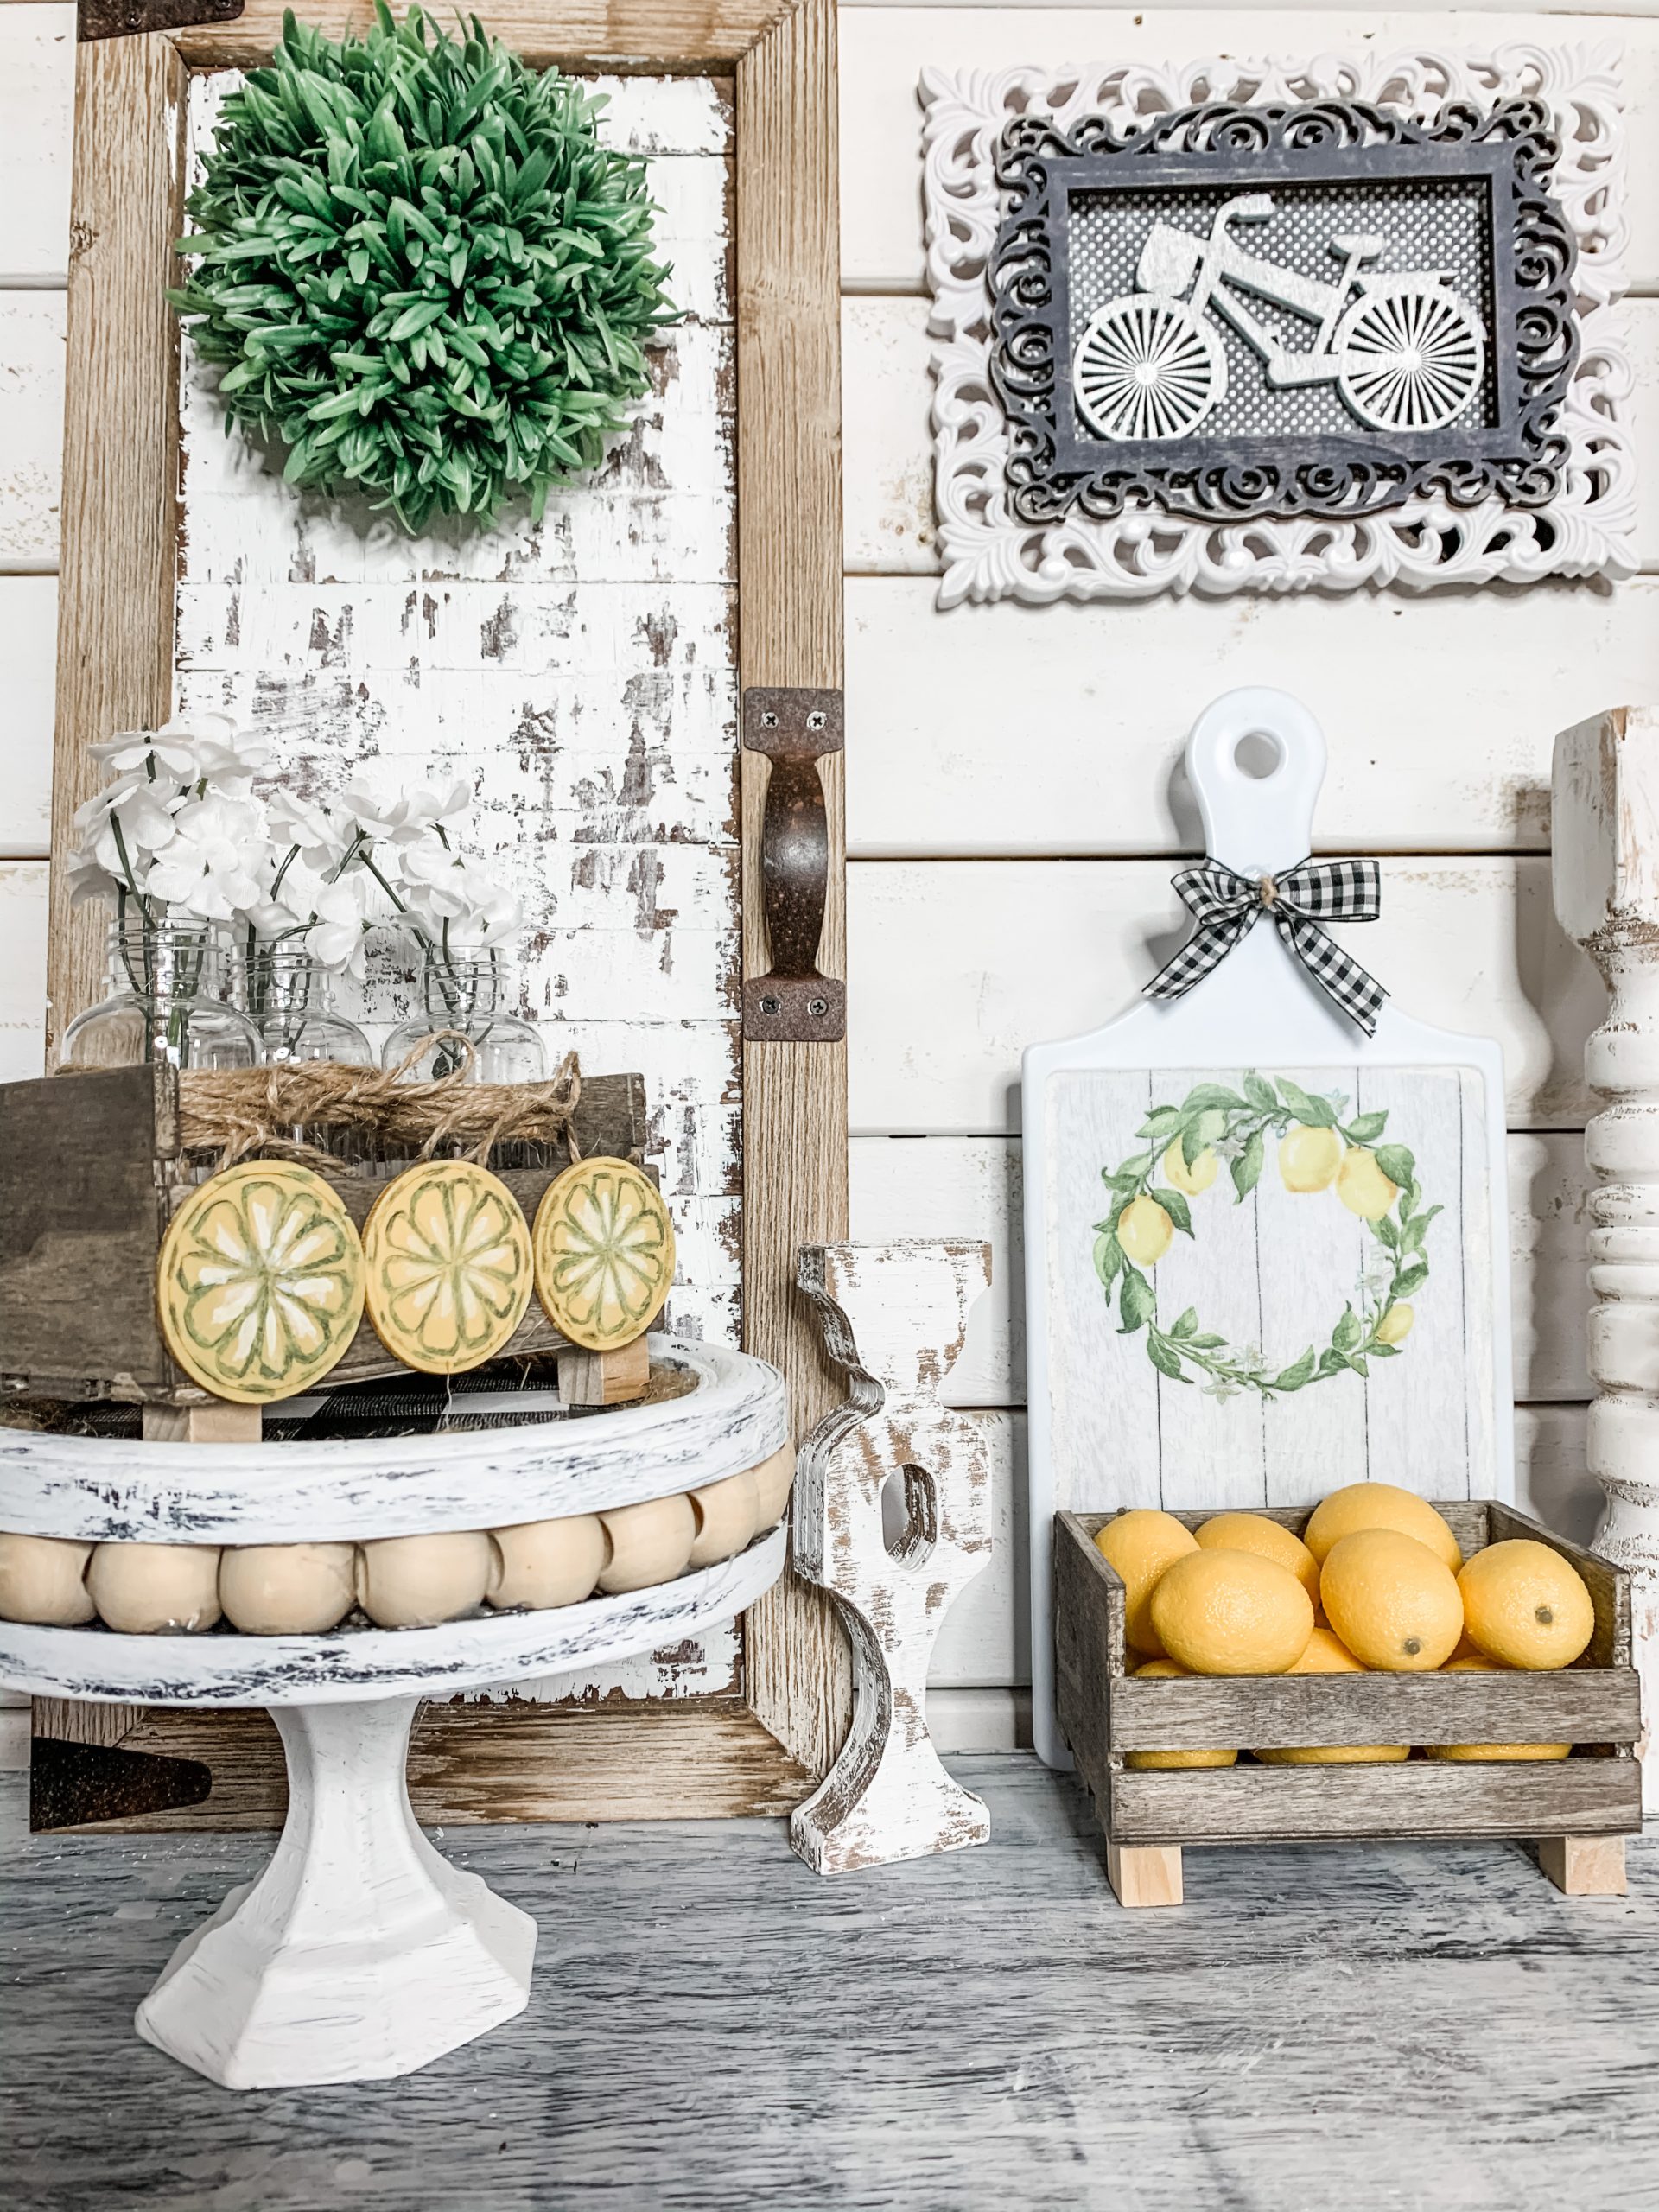 Dollar Tree DIY Farmhouse Lemon Cutting Board Decor